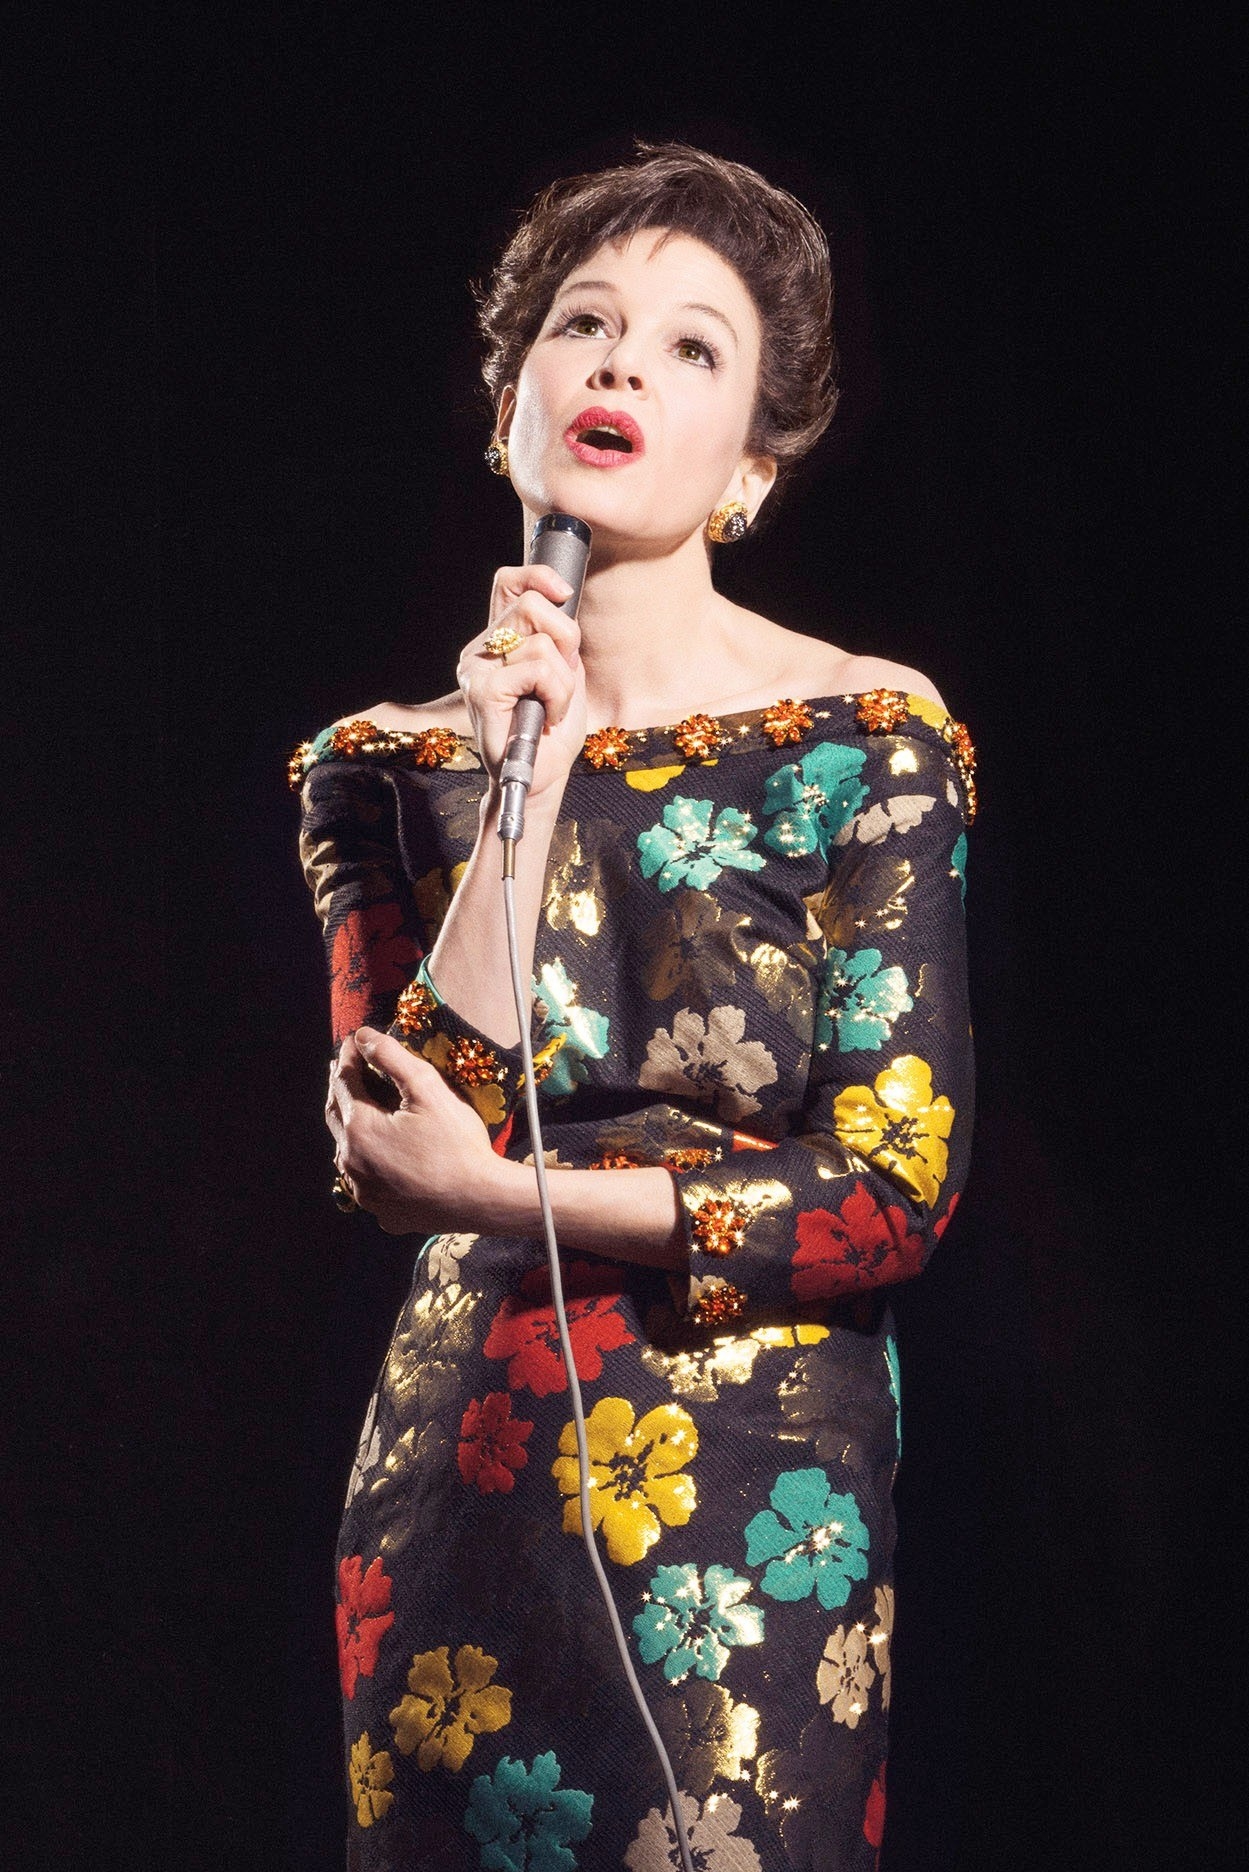 Renée Zellweger dressed as Judy Garland, singing